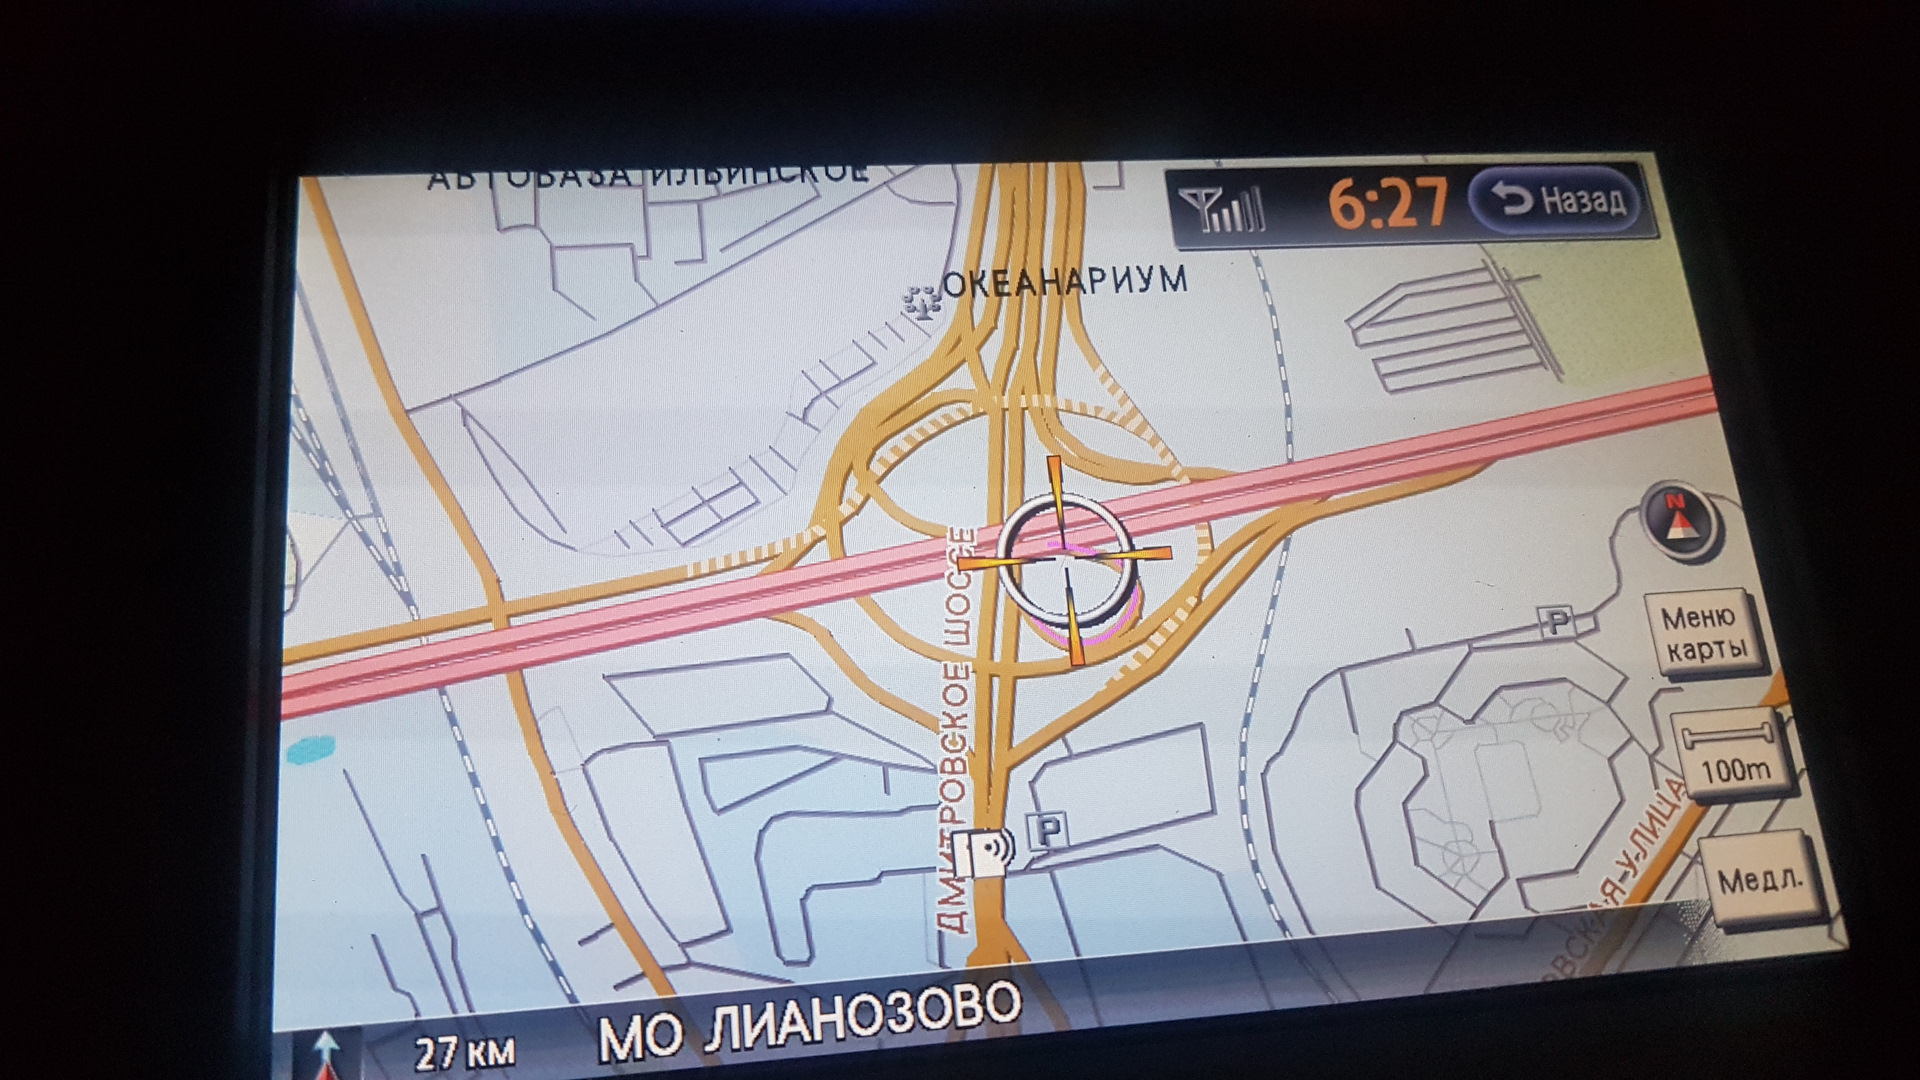 Пересечение МКАД И Дмитровского шоссе на карте. Navigation Map AZBAKA 9095. Ferrari navigation Map update MHH auto.